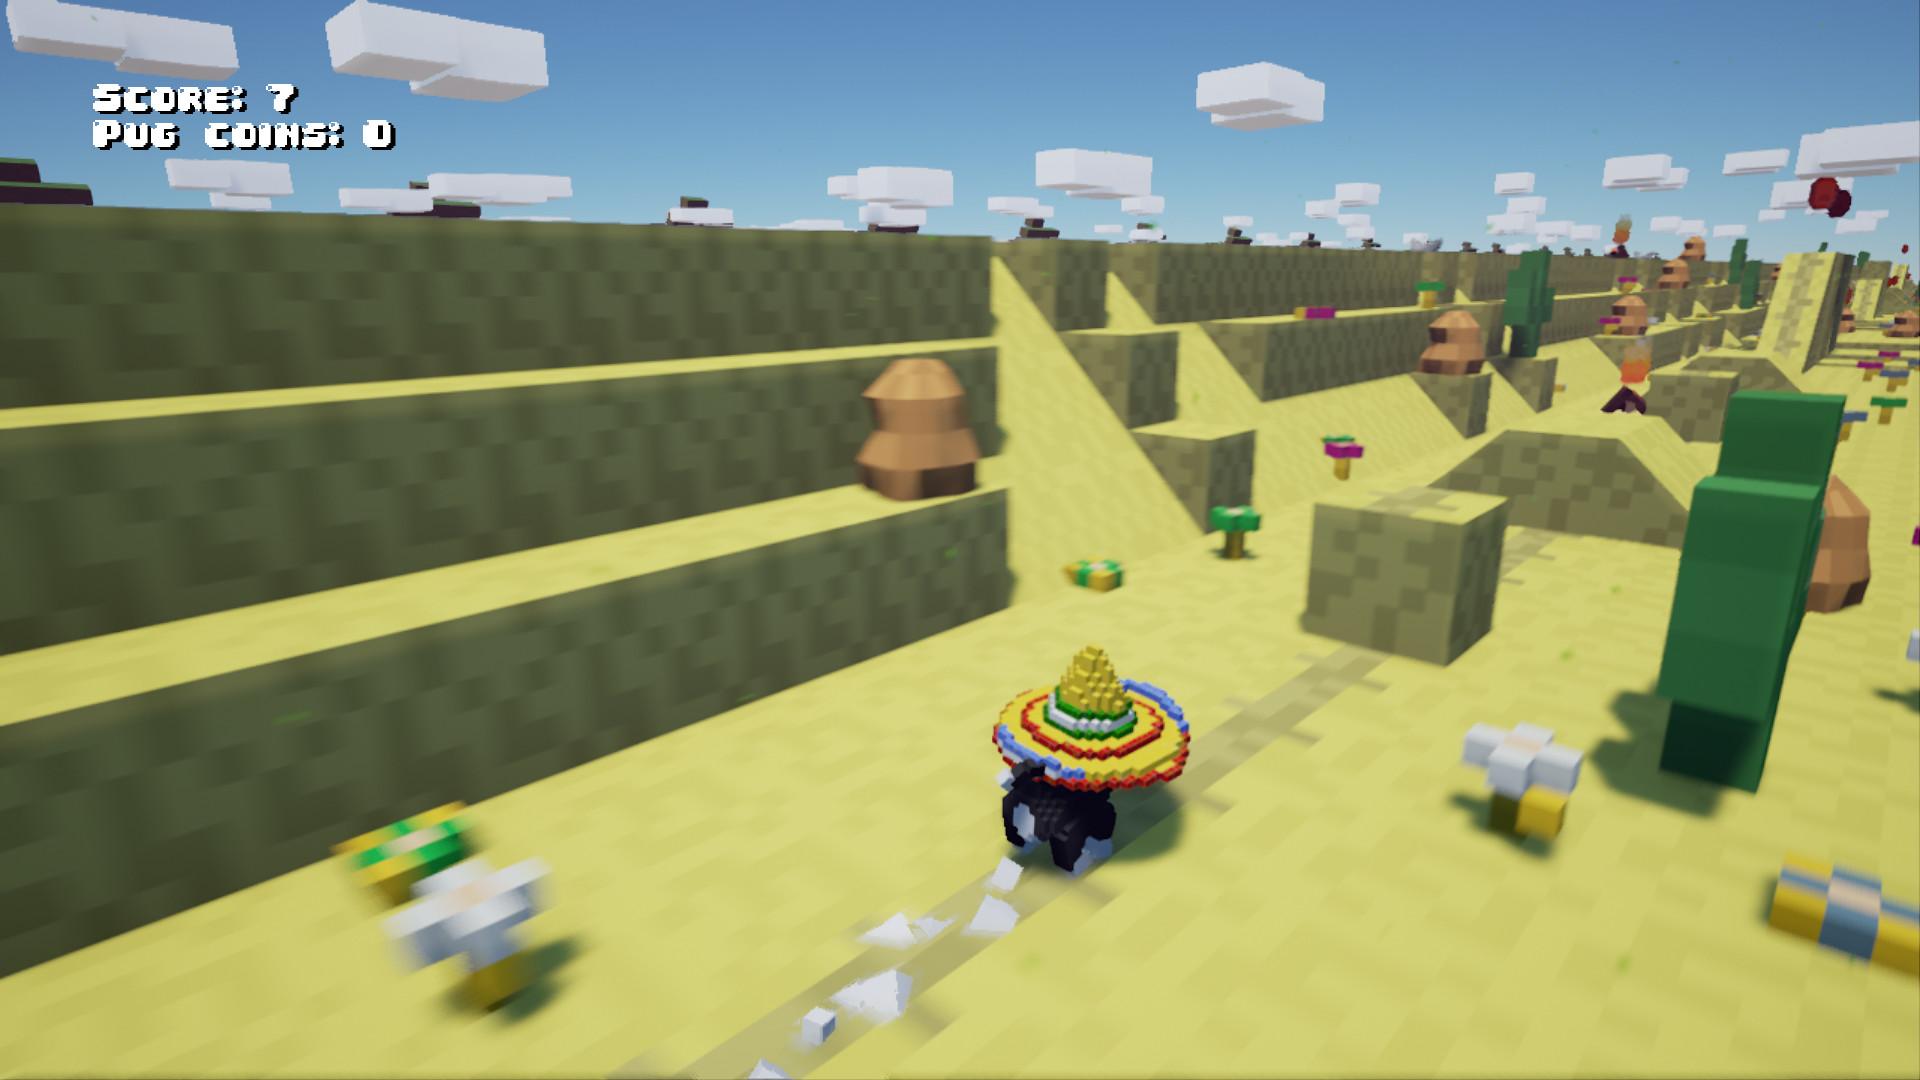 Screenshot №4 from game Turbo Pug 3D